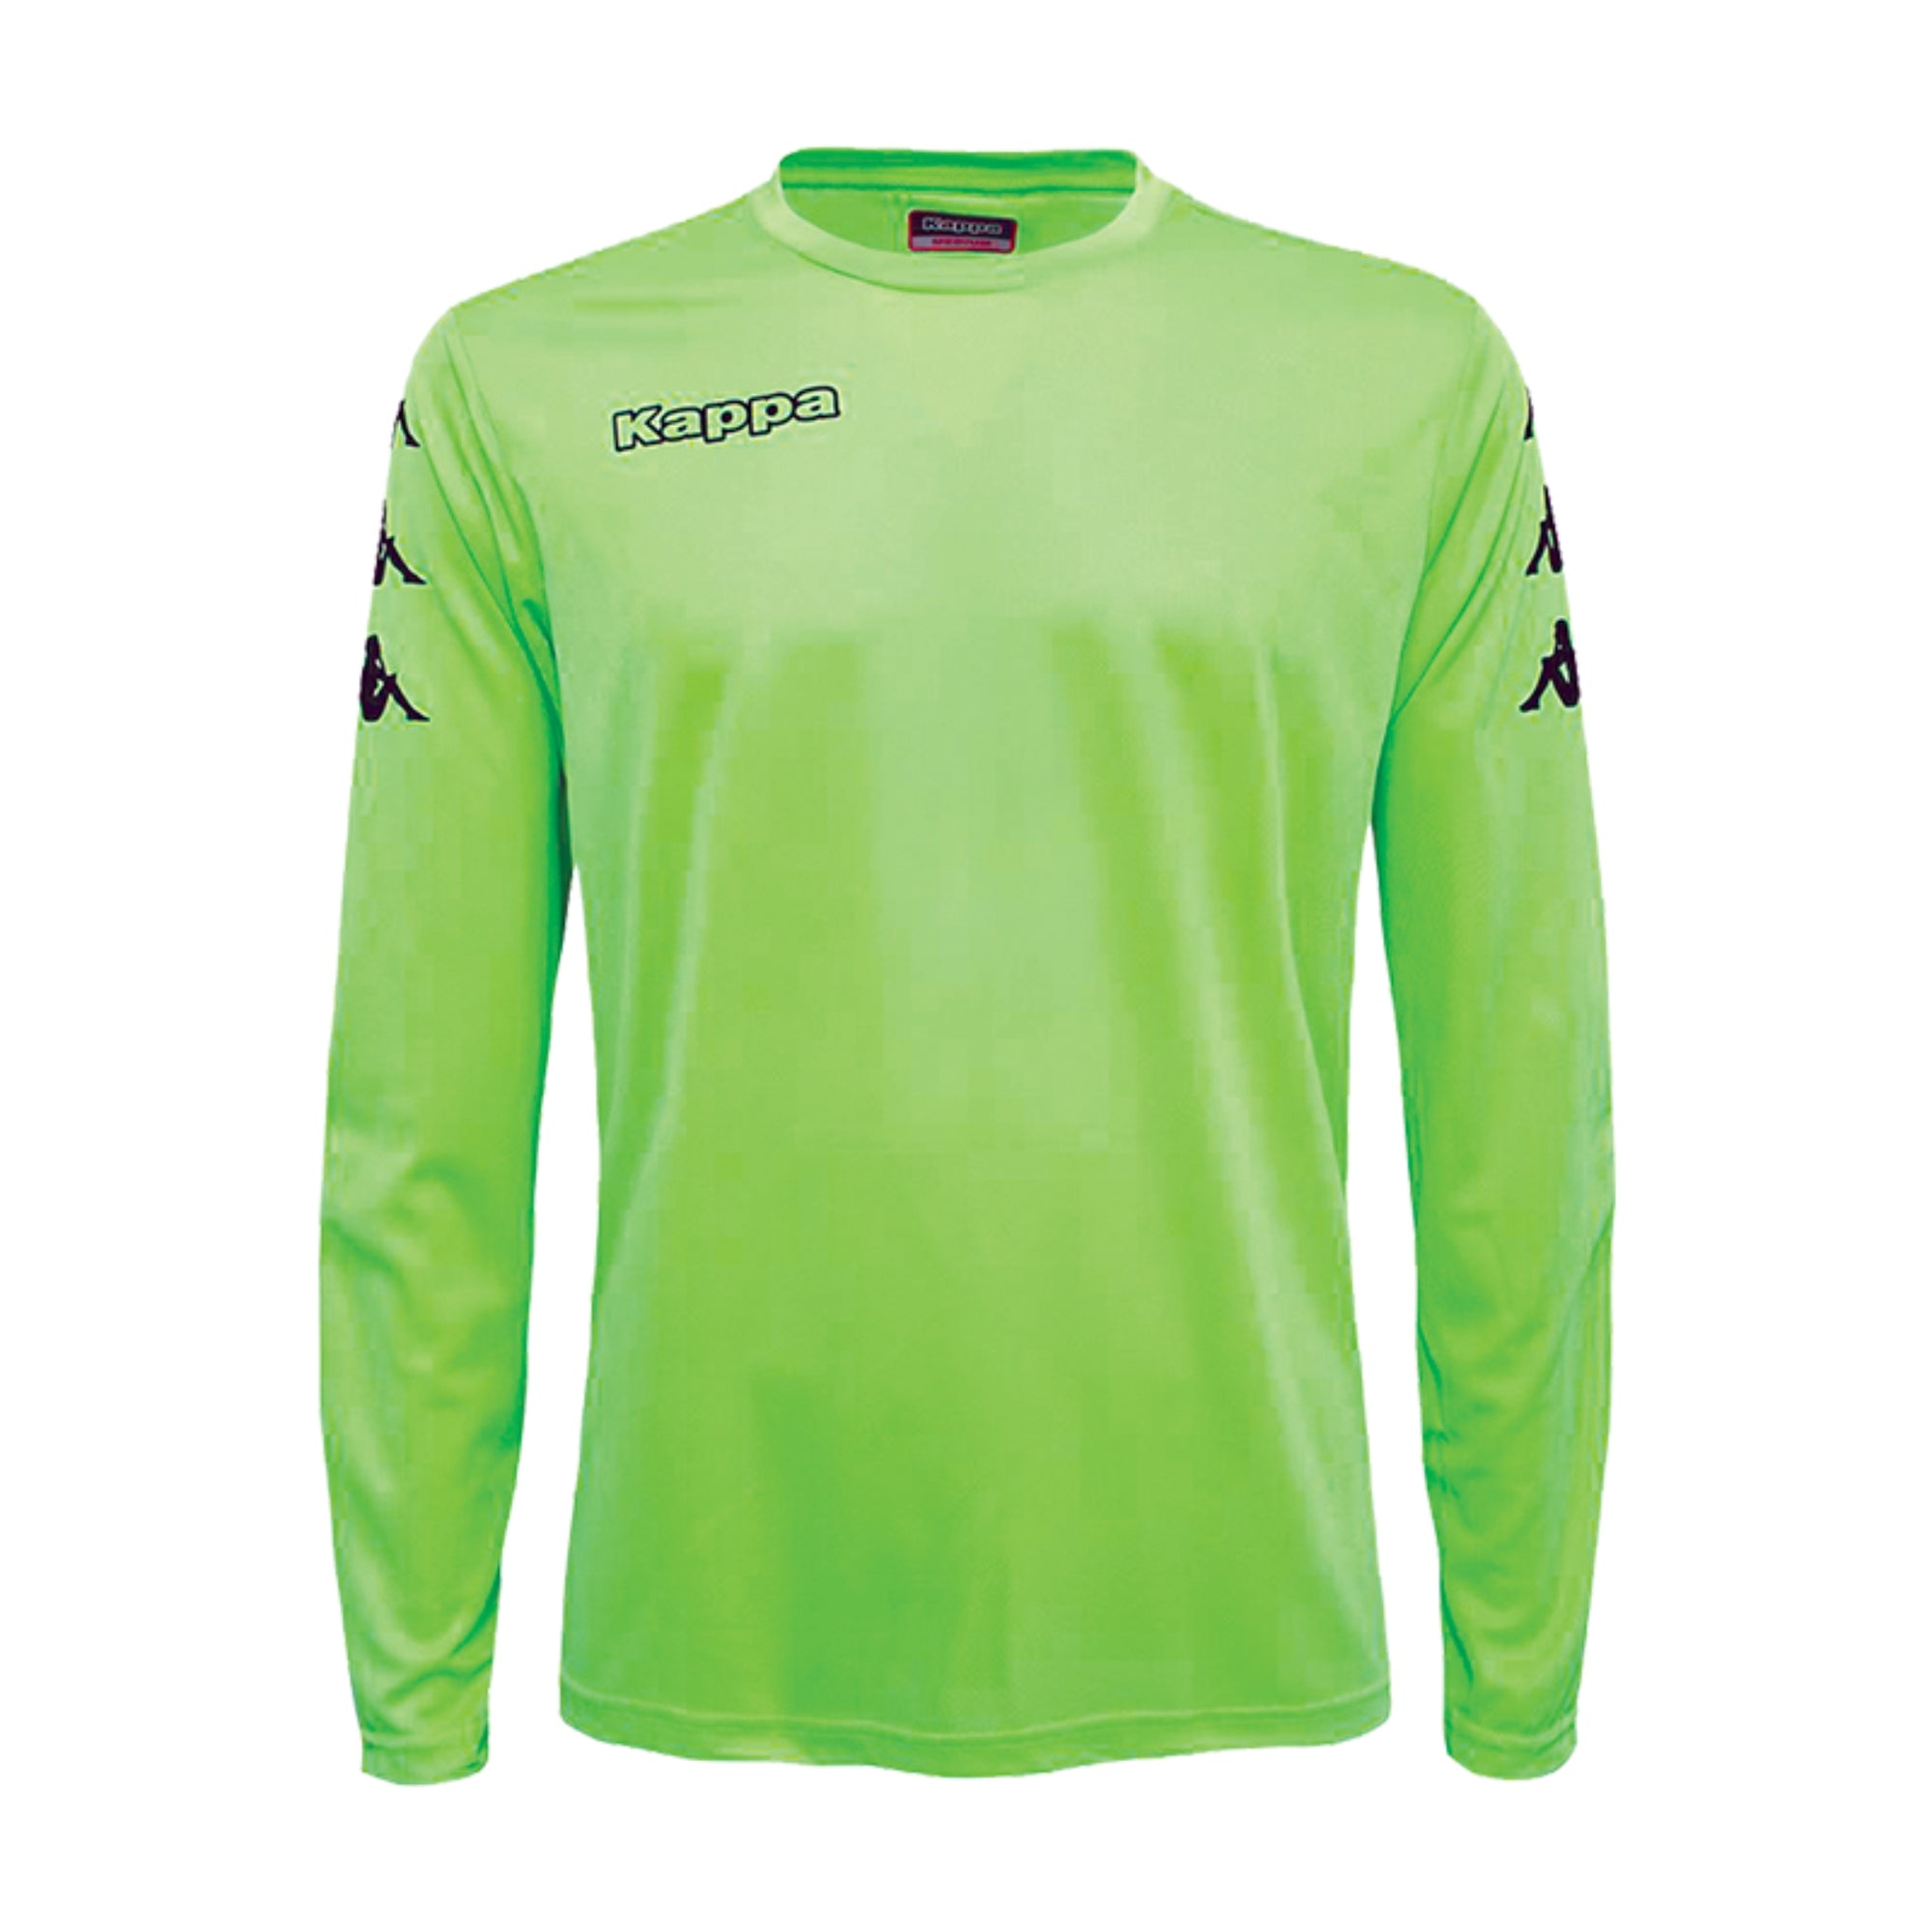 Kappa Man Goalkeeper Shirt LS - Green 